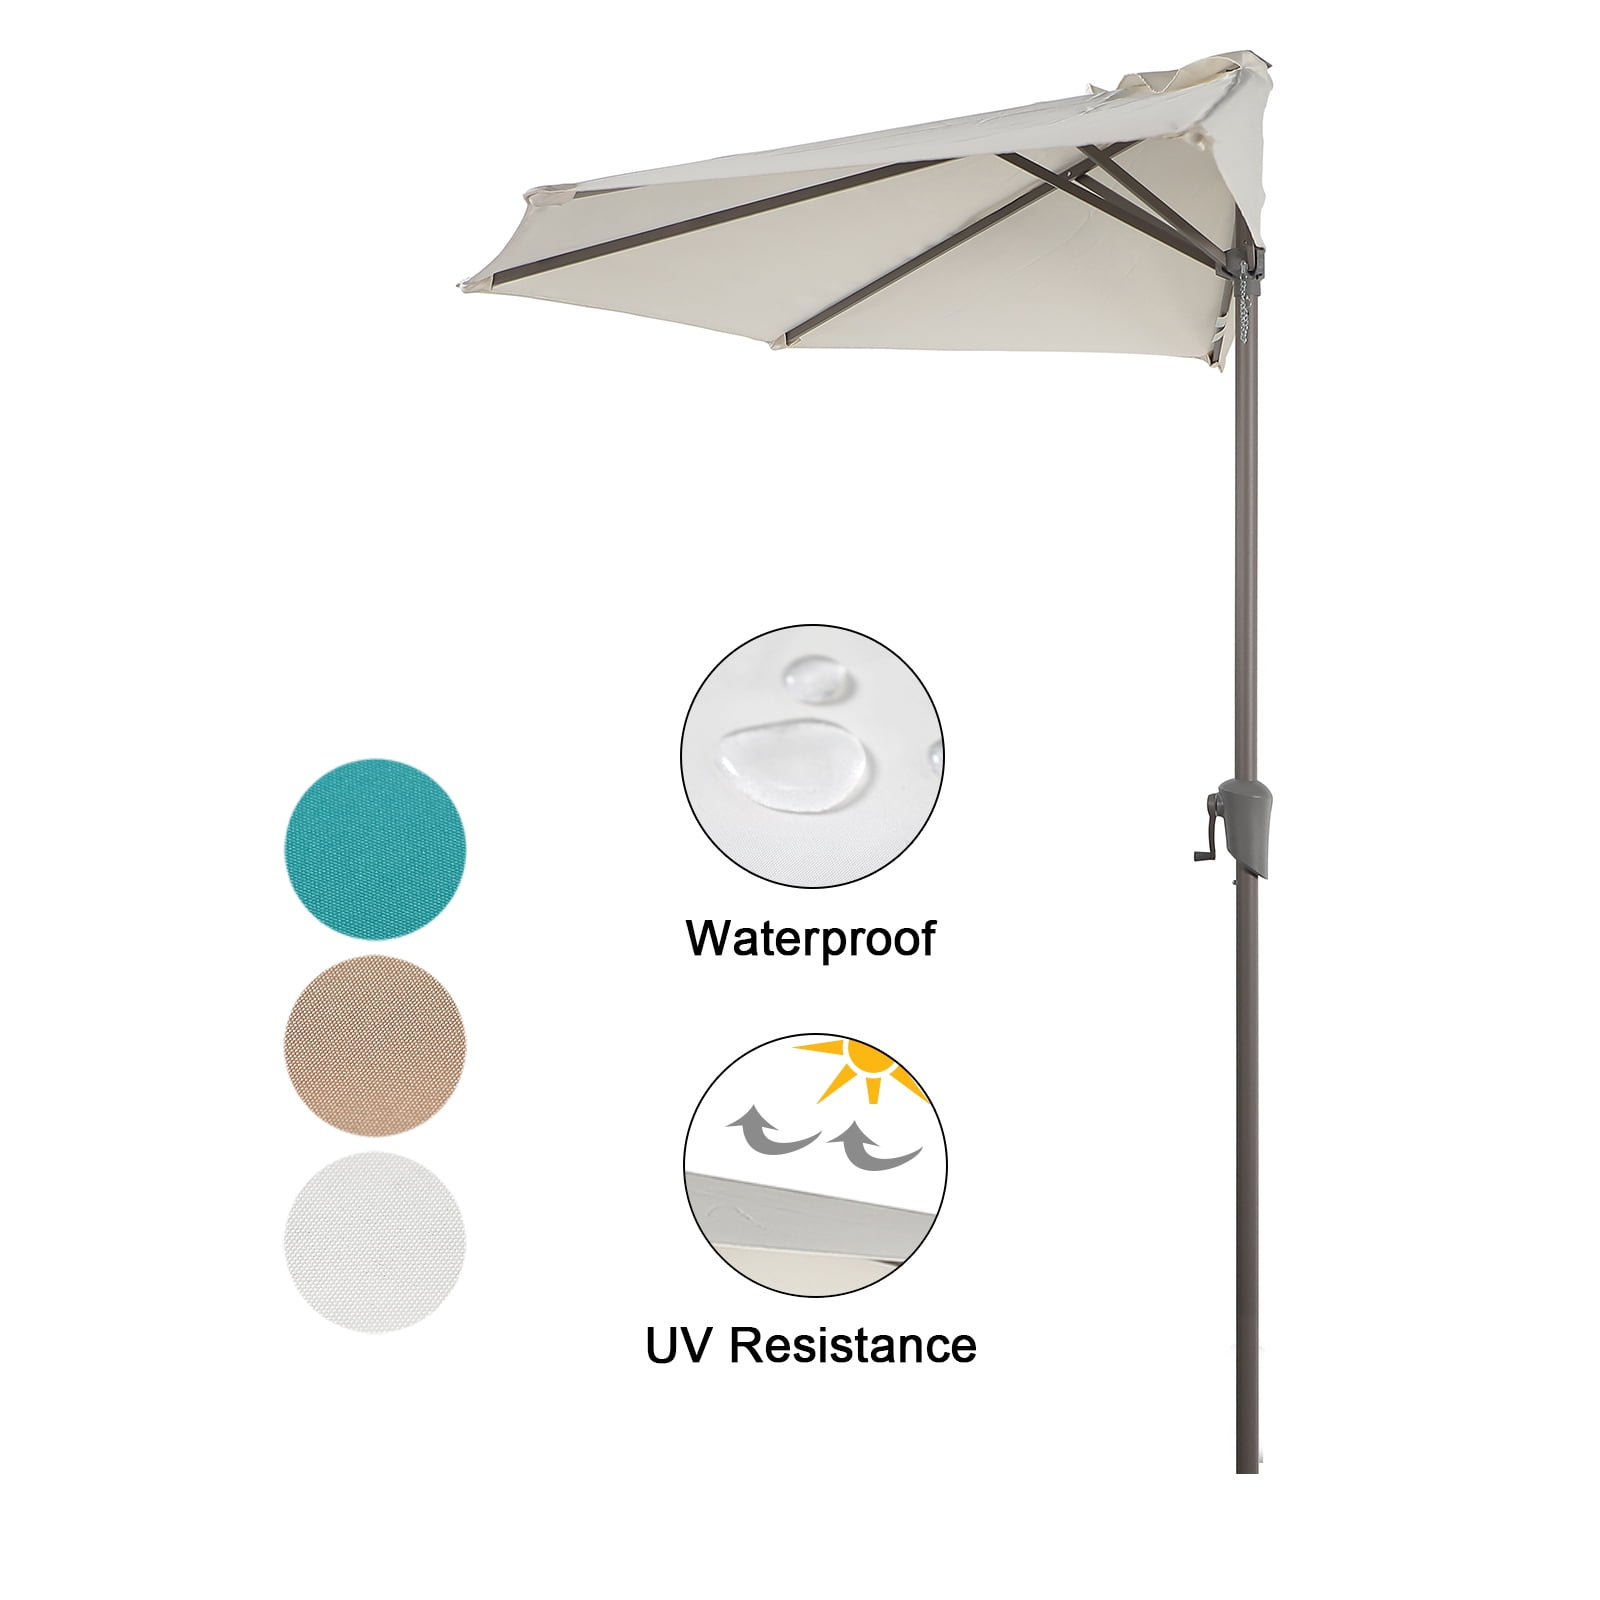 Details about   9FT Half Round Umbrella Waterproof Folding Sunshade Beach Umbrella Patio Supply 